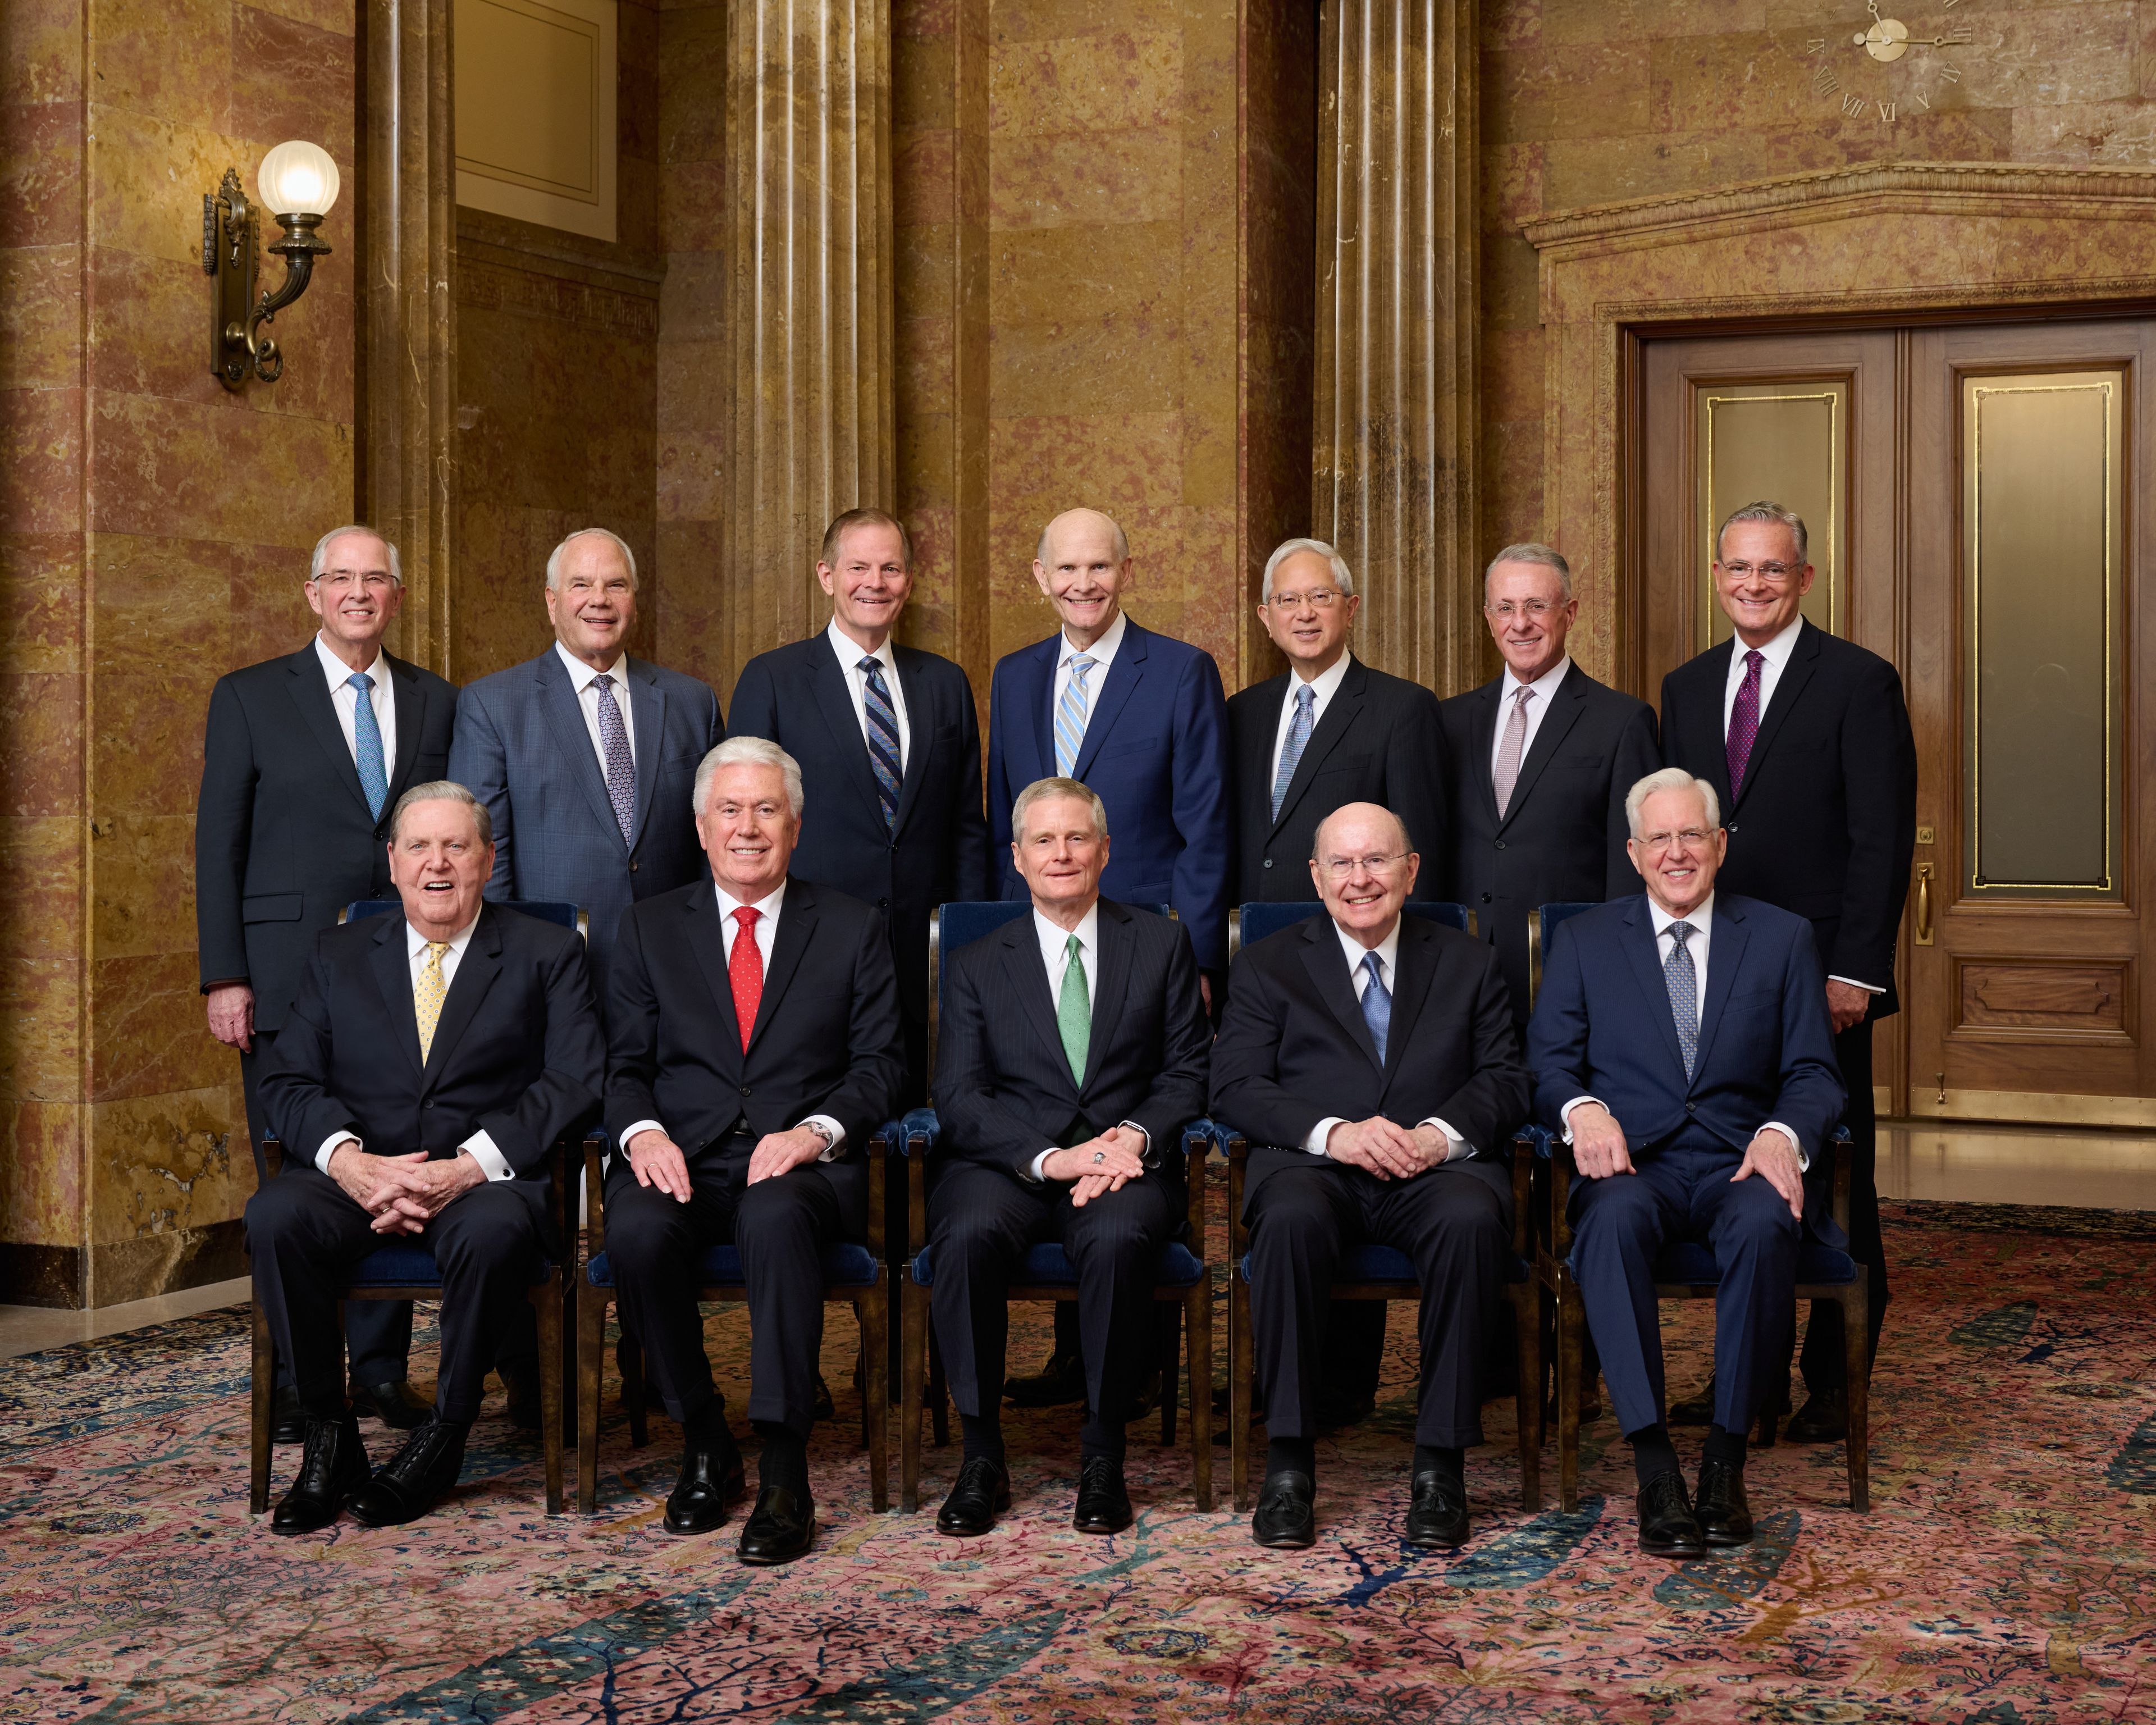 The Official Portrait of The Quorum of Twelve Apostles.